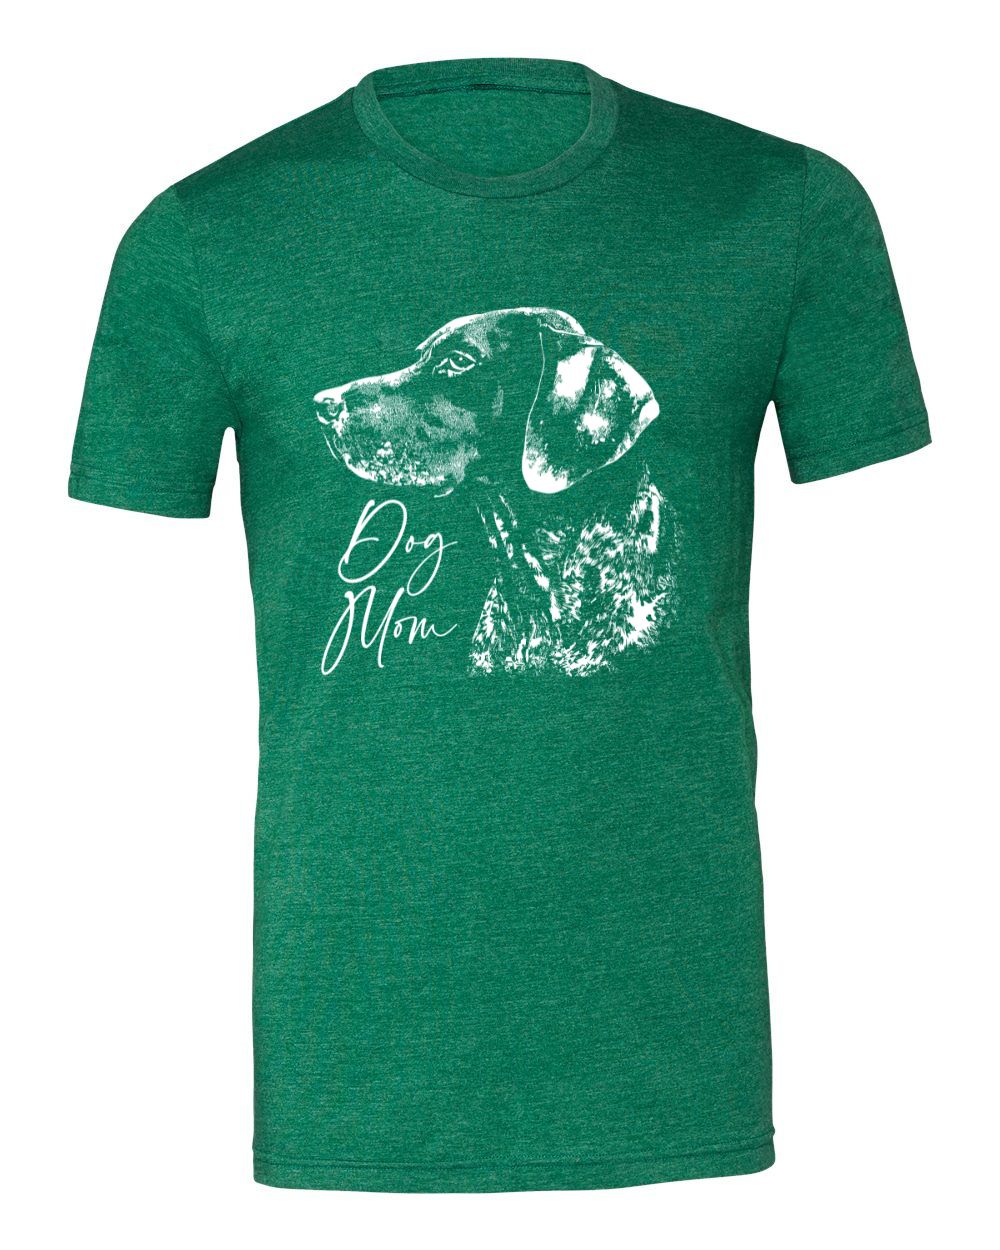 German Shorthaired Pointer Dog Mom T-Shirt